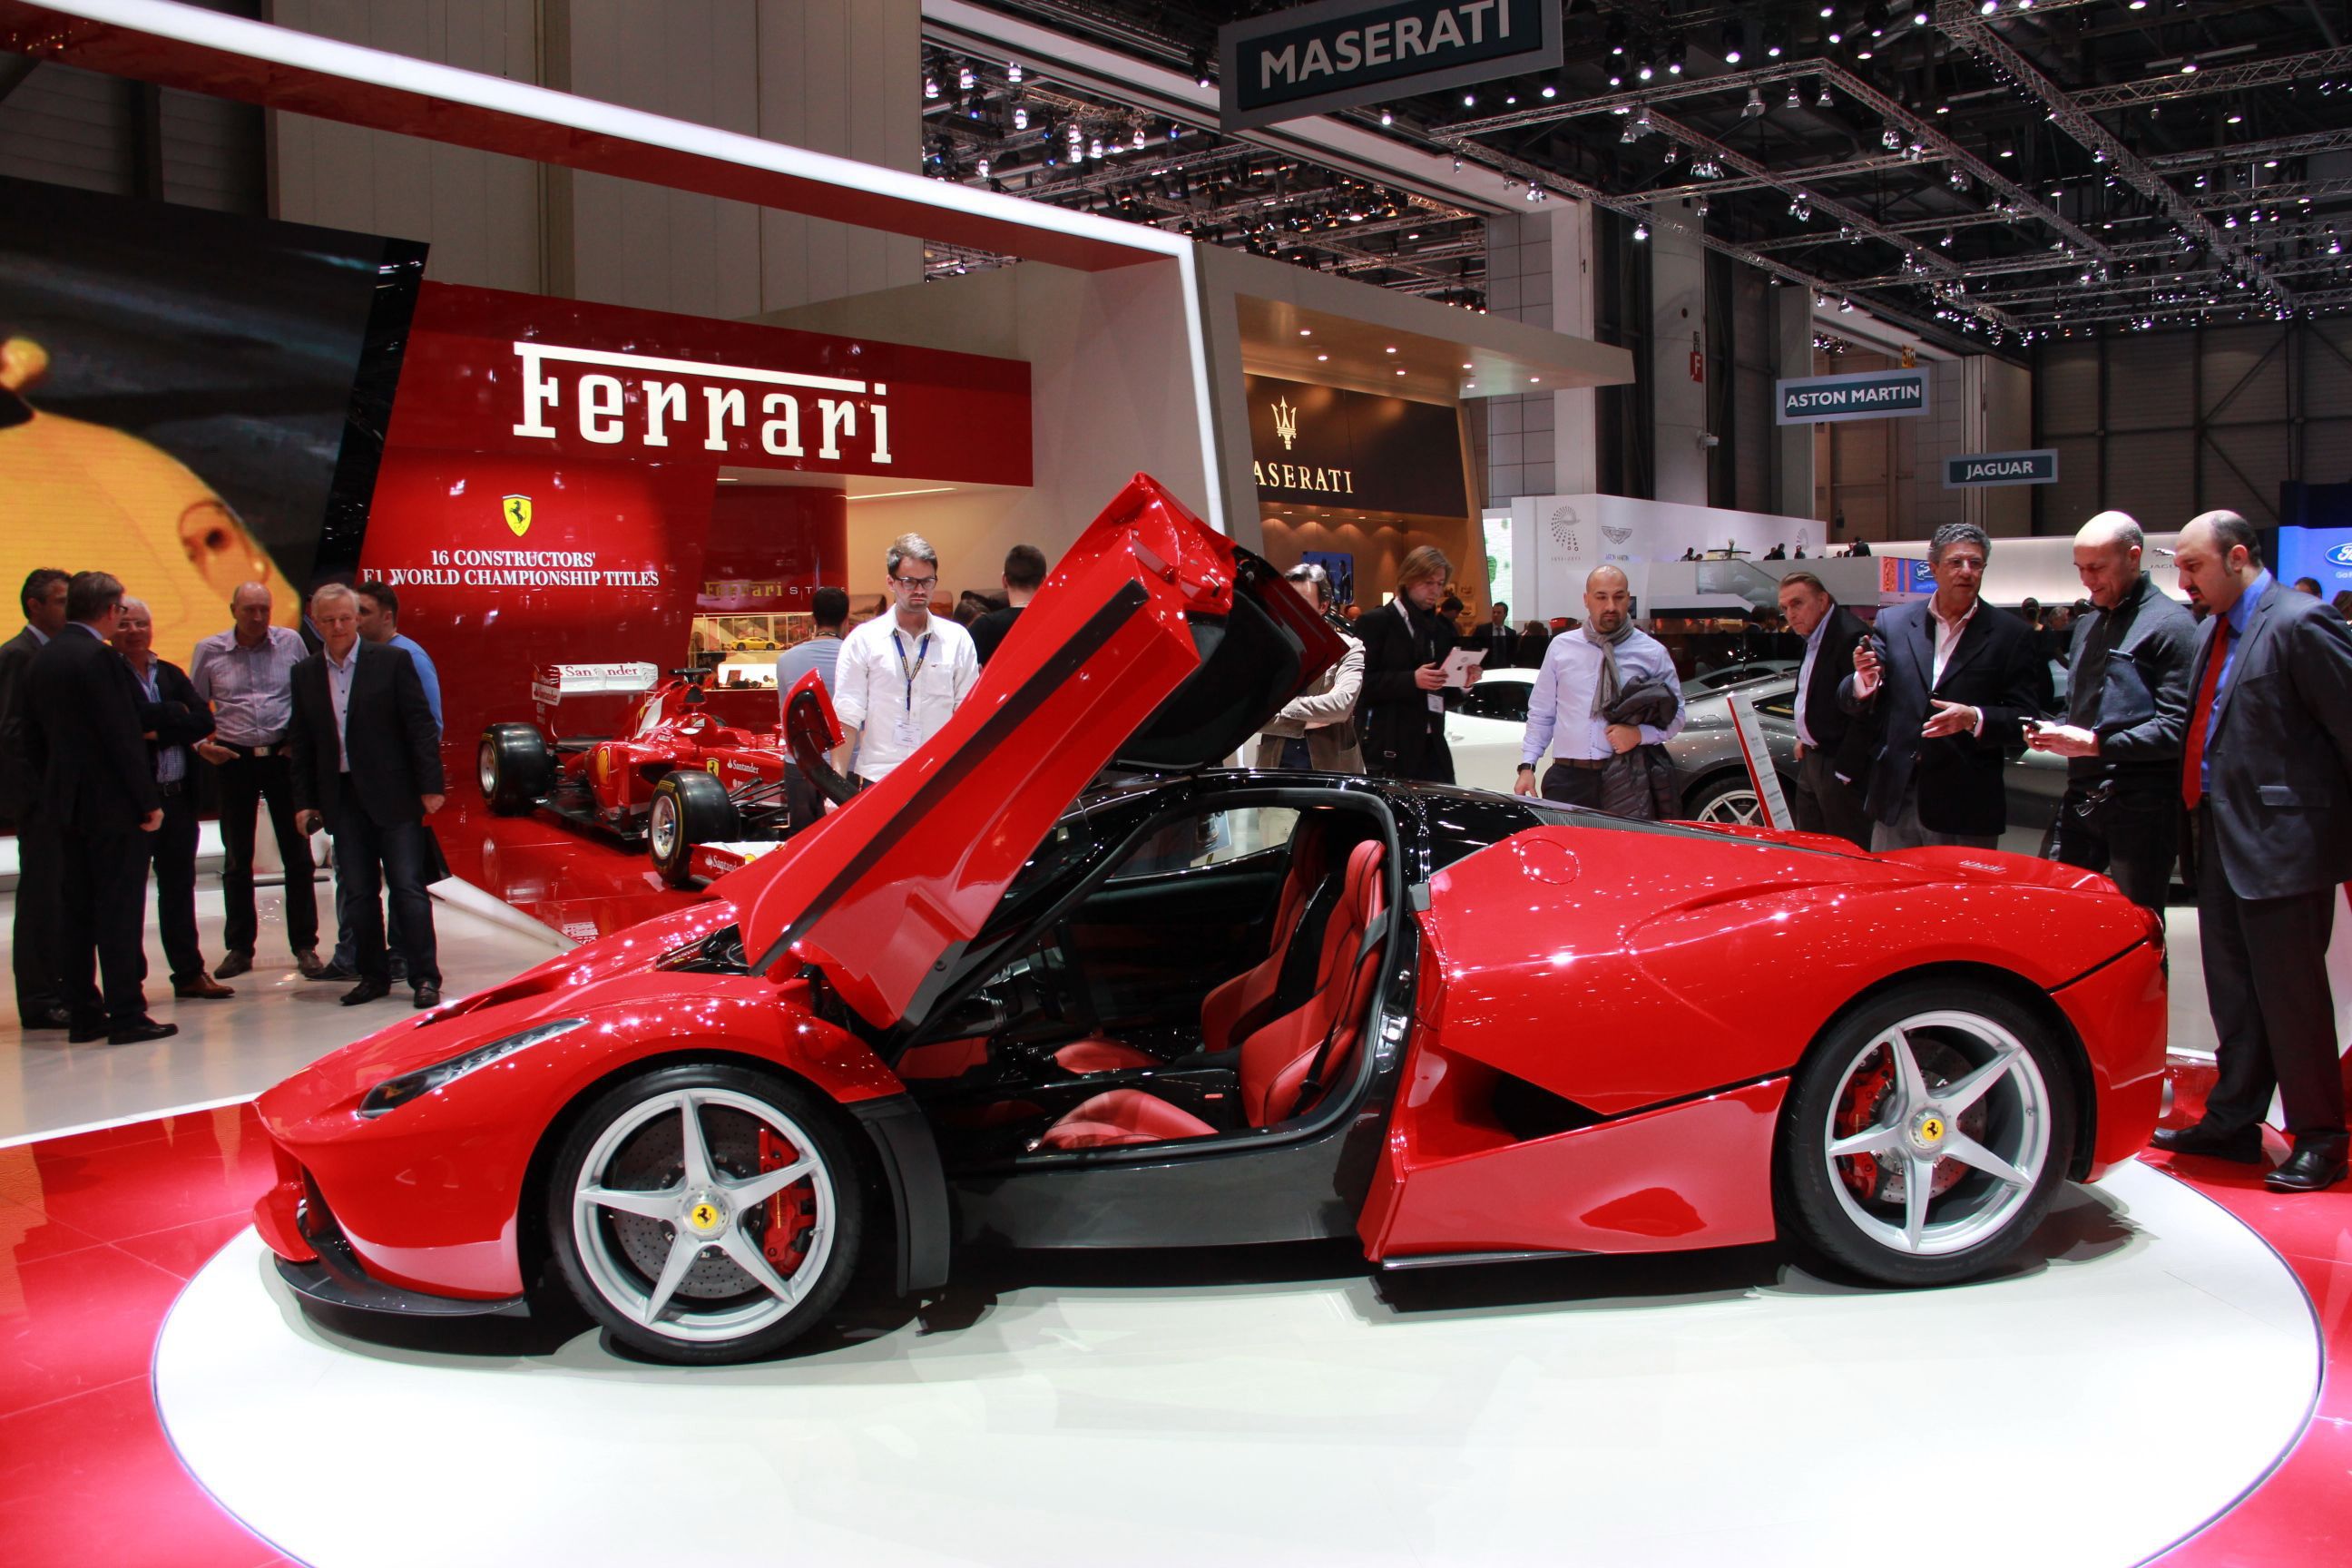 2014 Ferrari LaFerrari